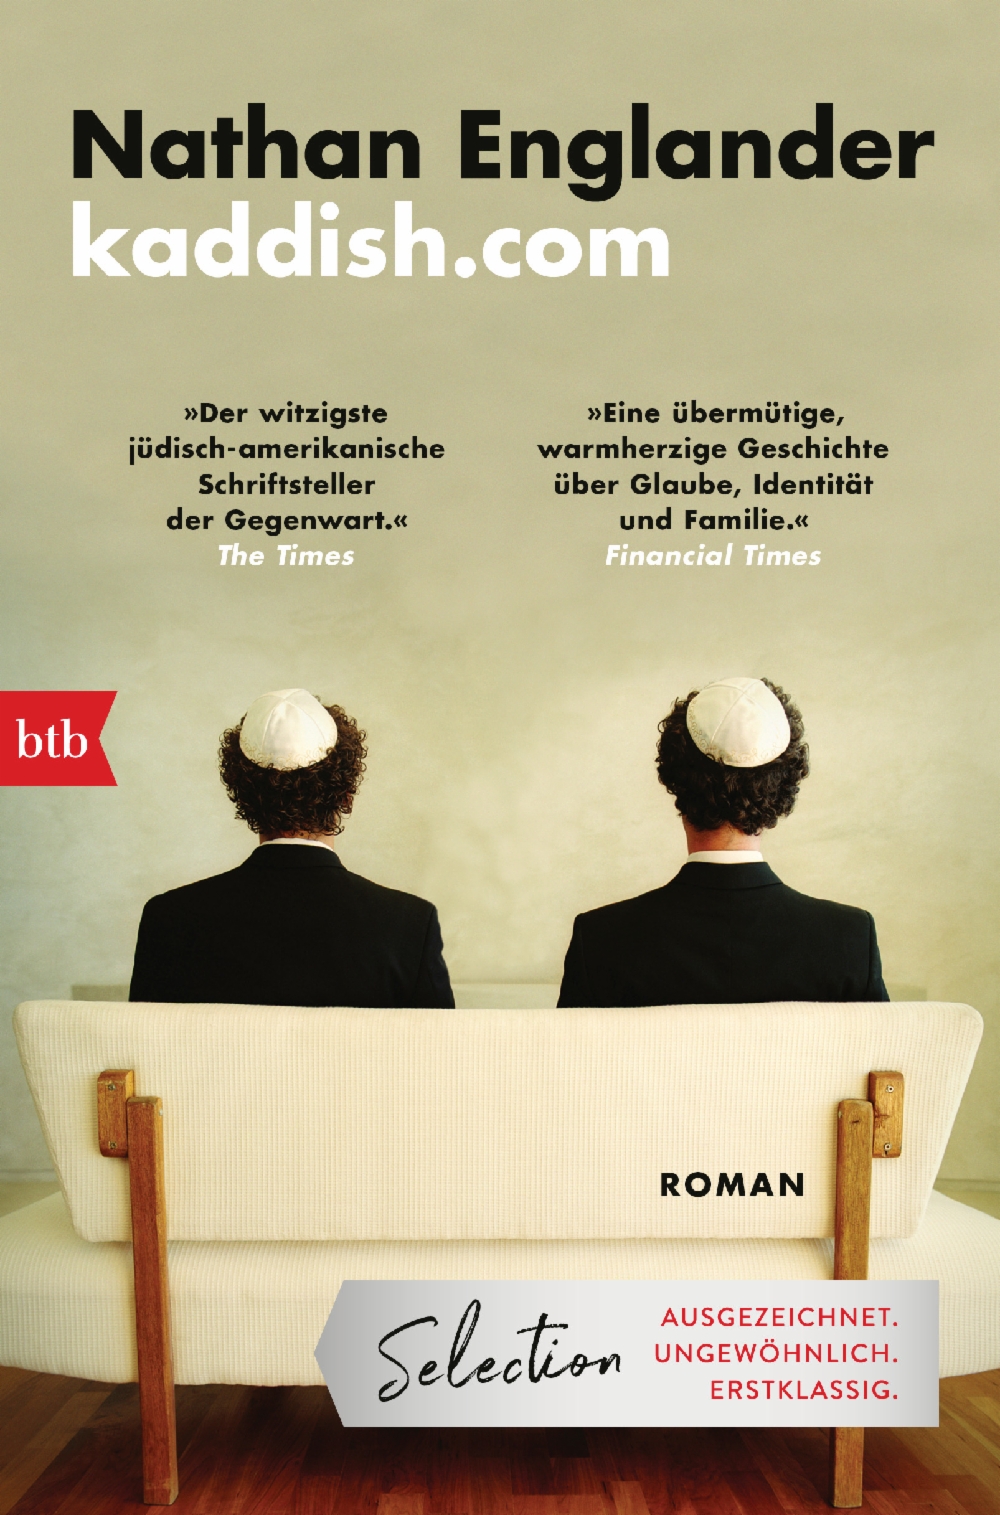 Cover von Nathan Englanders Roman "kaddish.com" erschienen bei btb; Quelle: Verlag